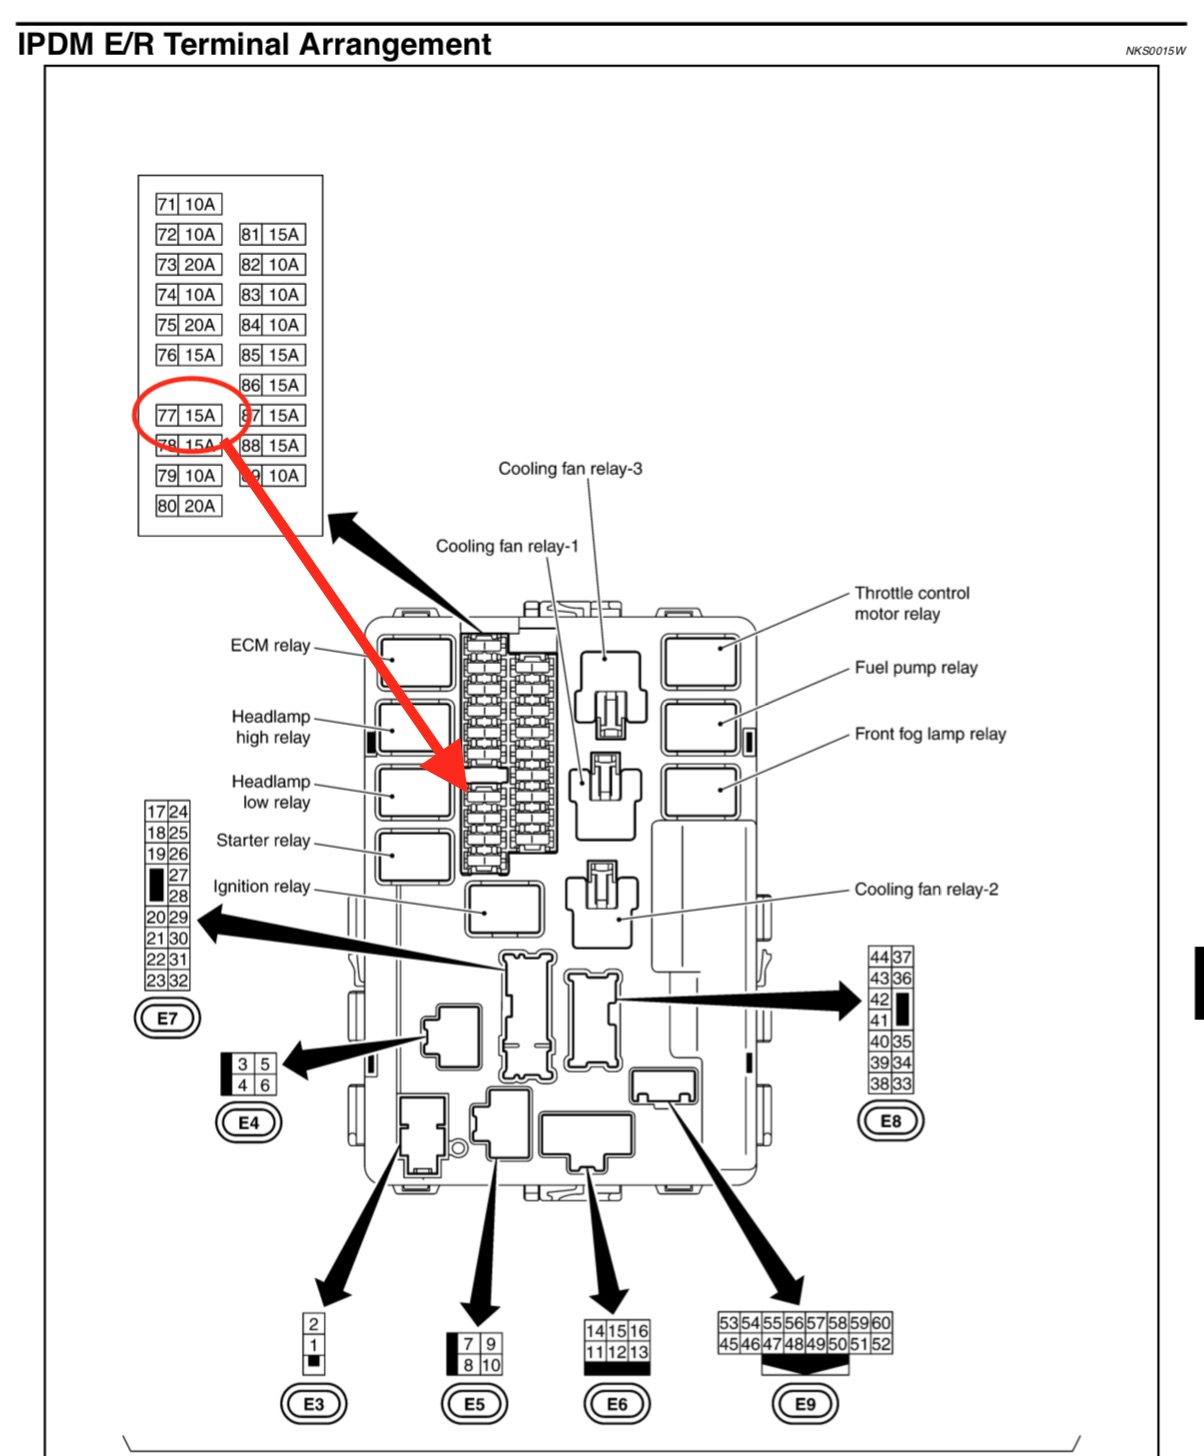 Mechanical key wont turn ignition - Page 2 - G35Driver - Infiniti G35